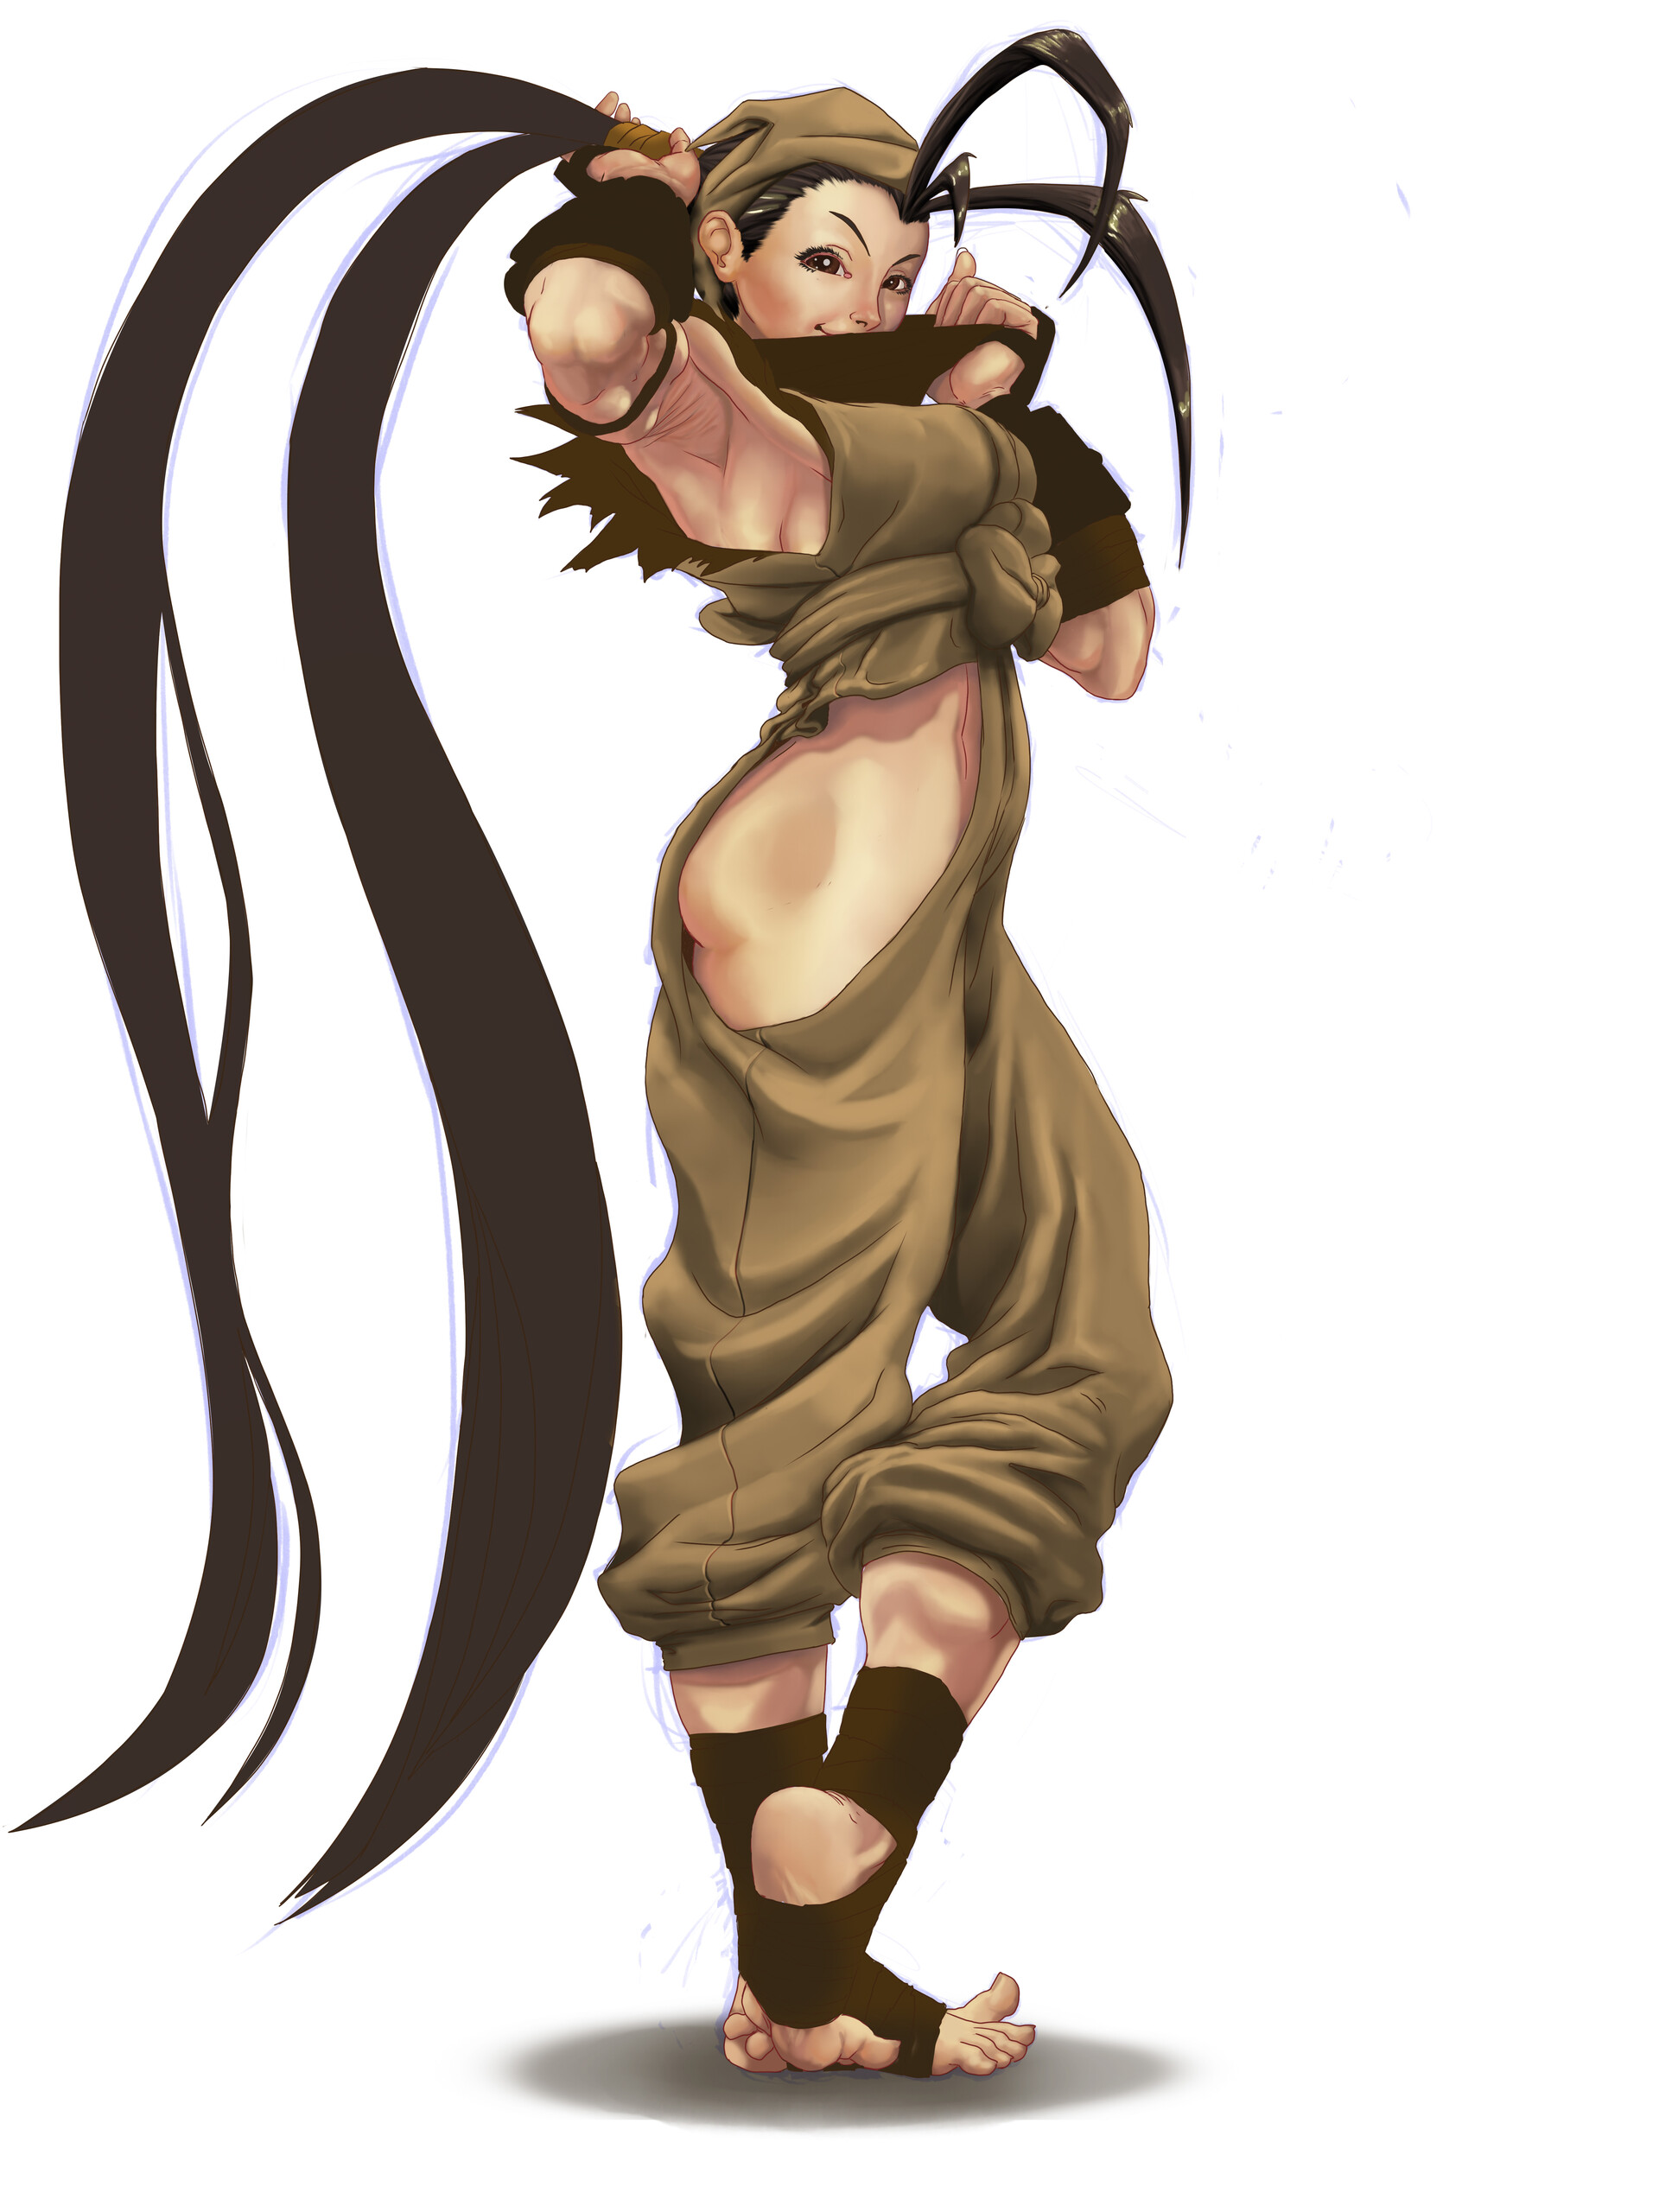 Ibuki from Street Fighter.